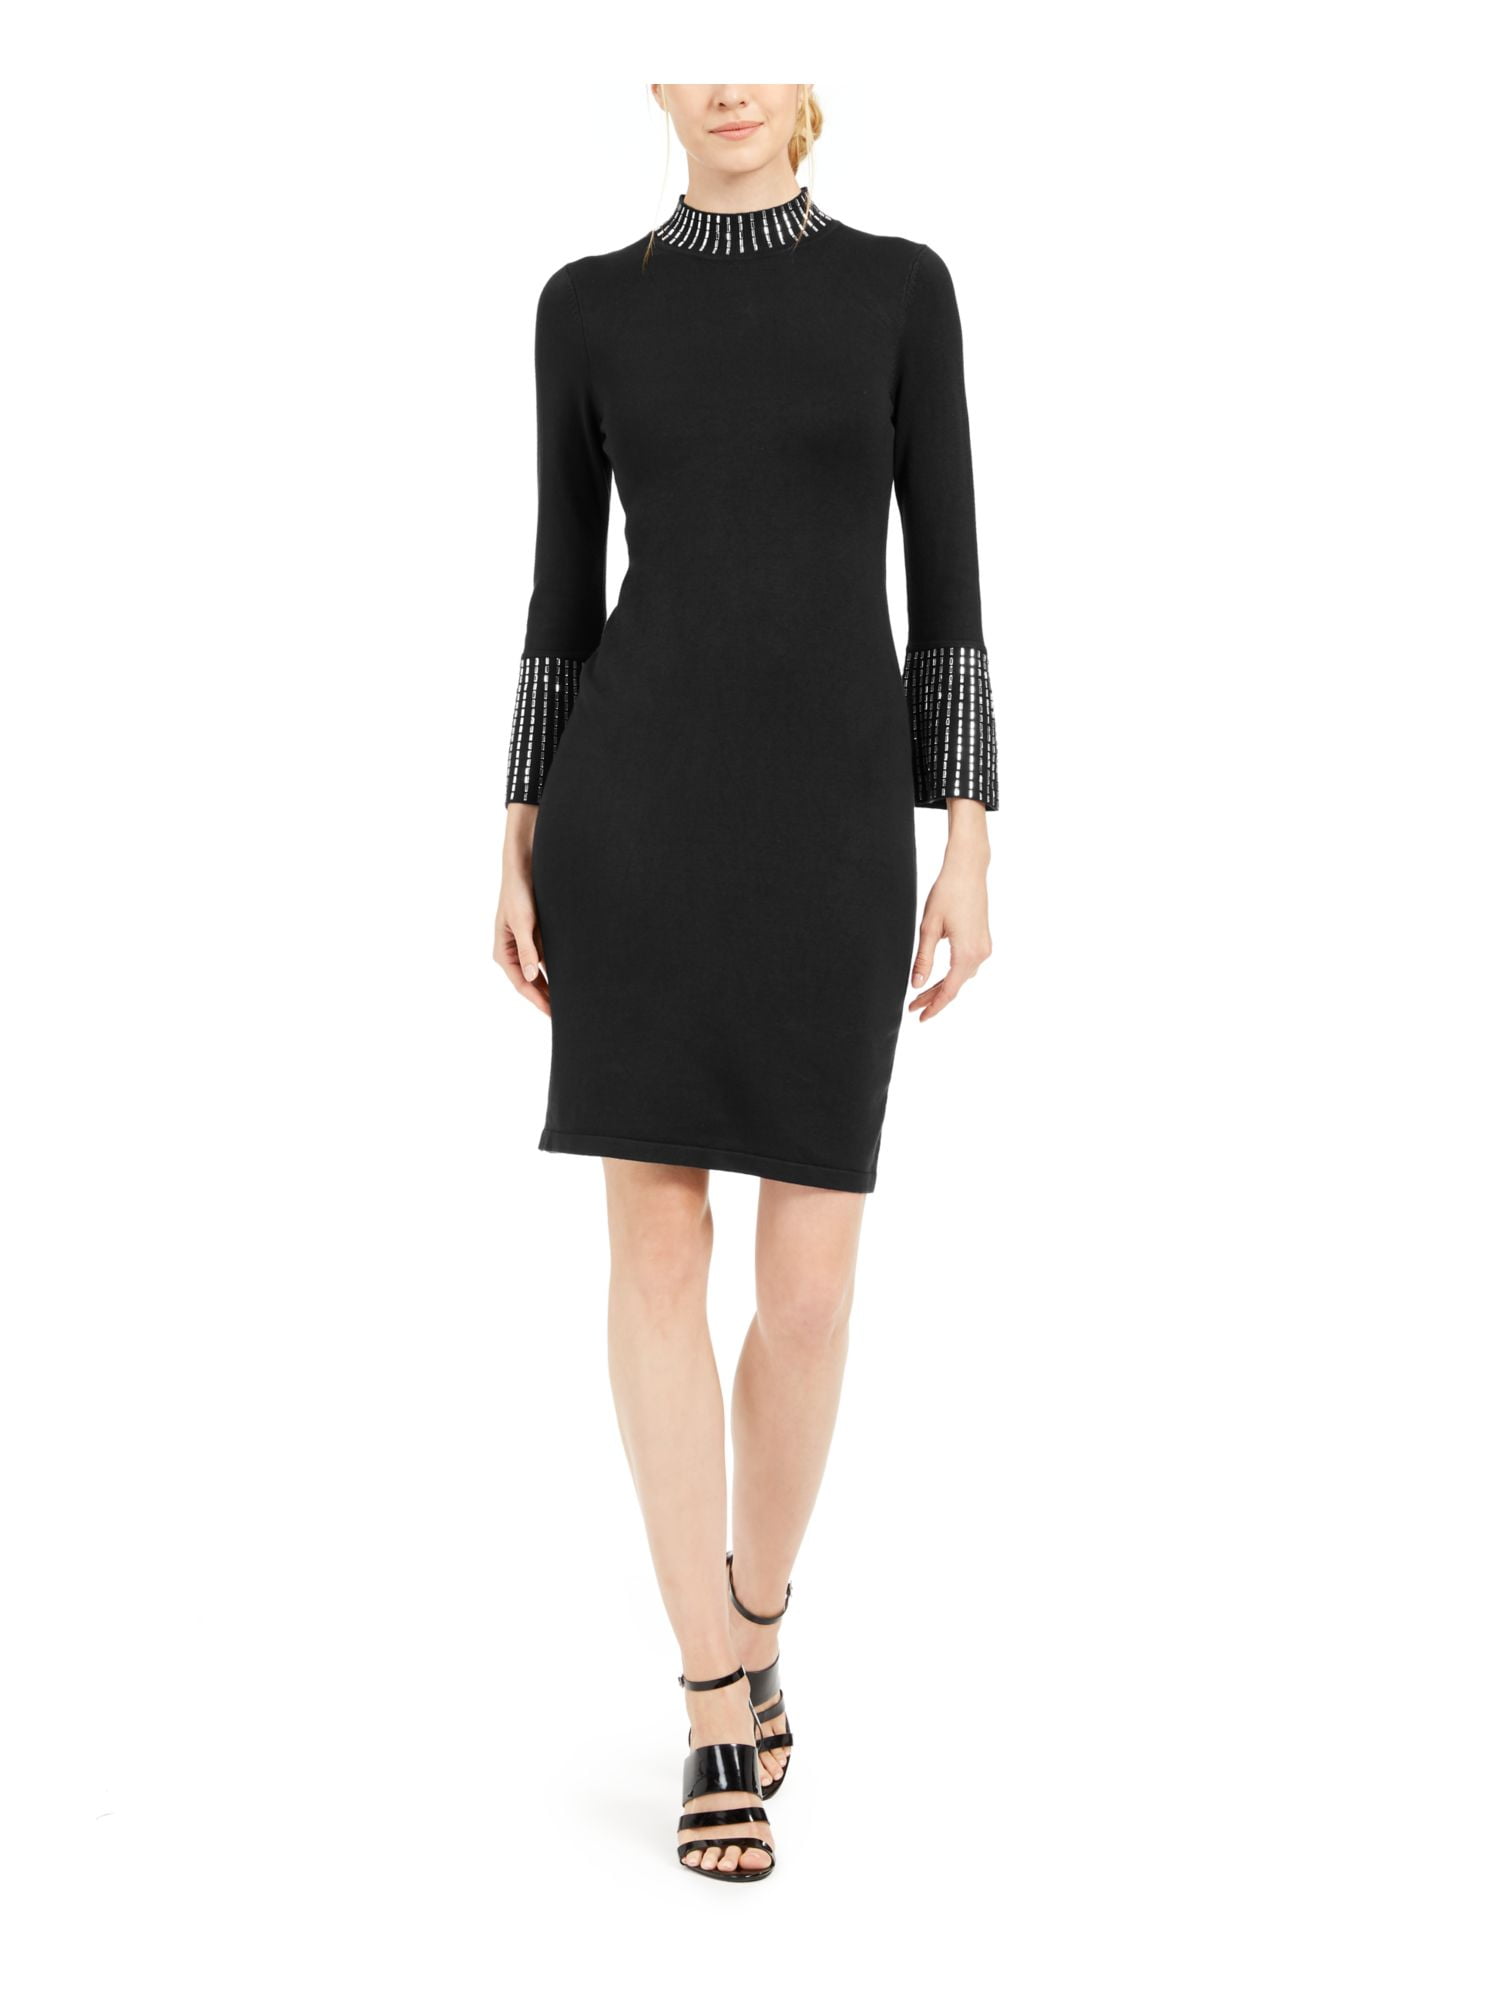 Calvin Klein Womens Petites Embellished Bell Sleeves Sweaterdress Black PXS  